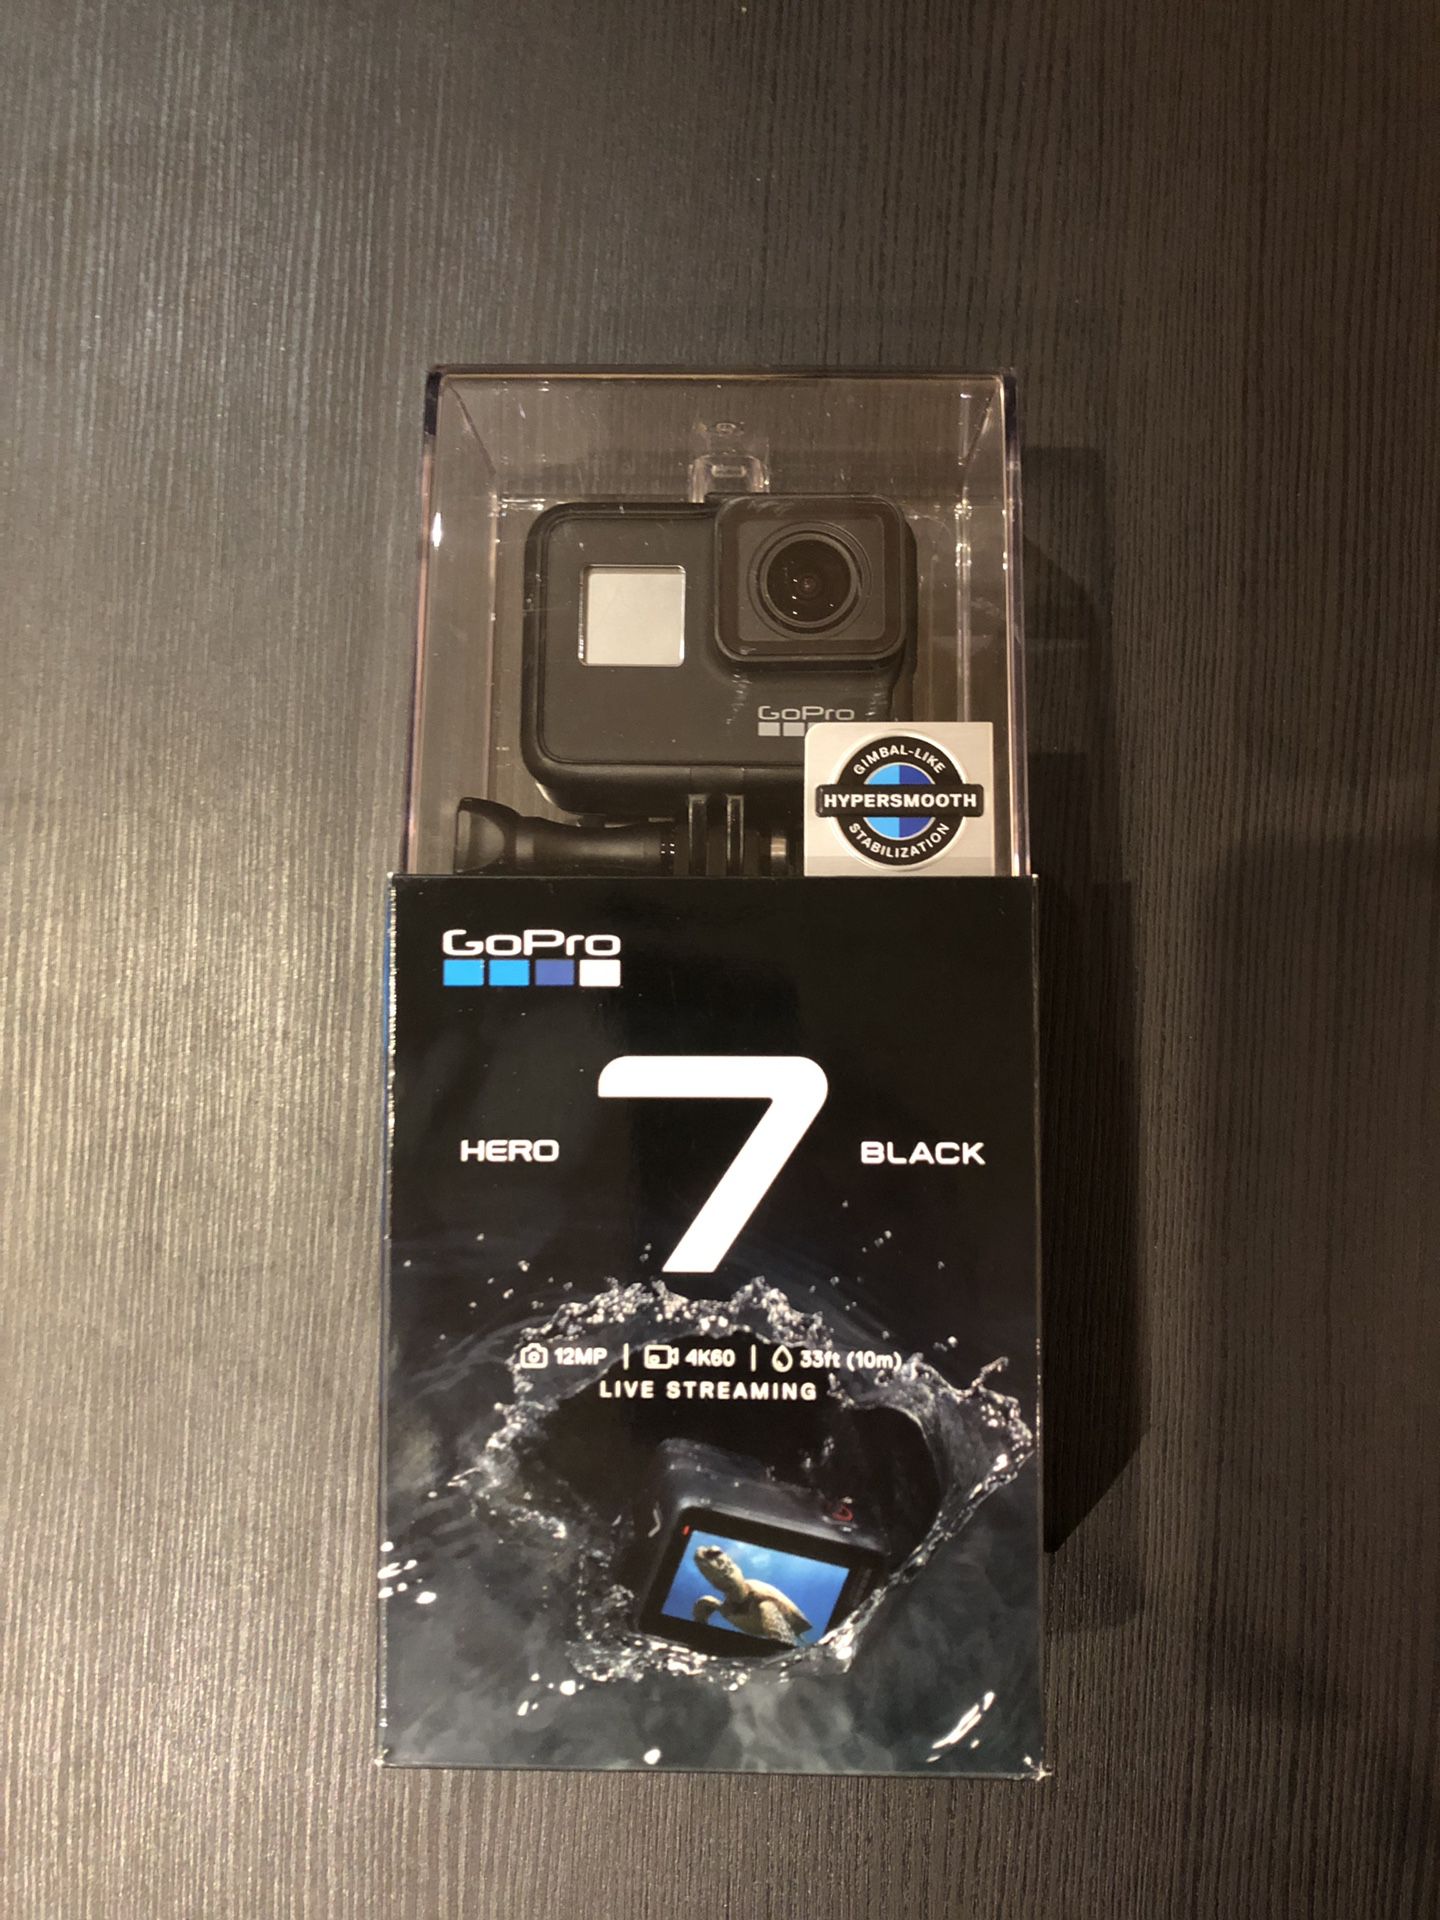 GoPro Hero 7 Black - Waterproof 4K HDR Action Camera